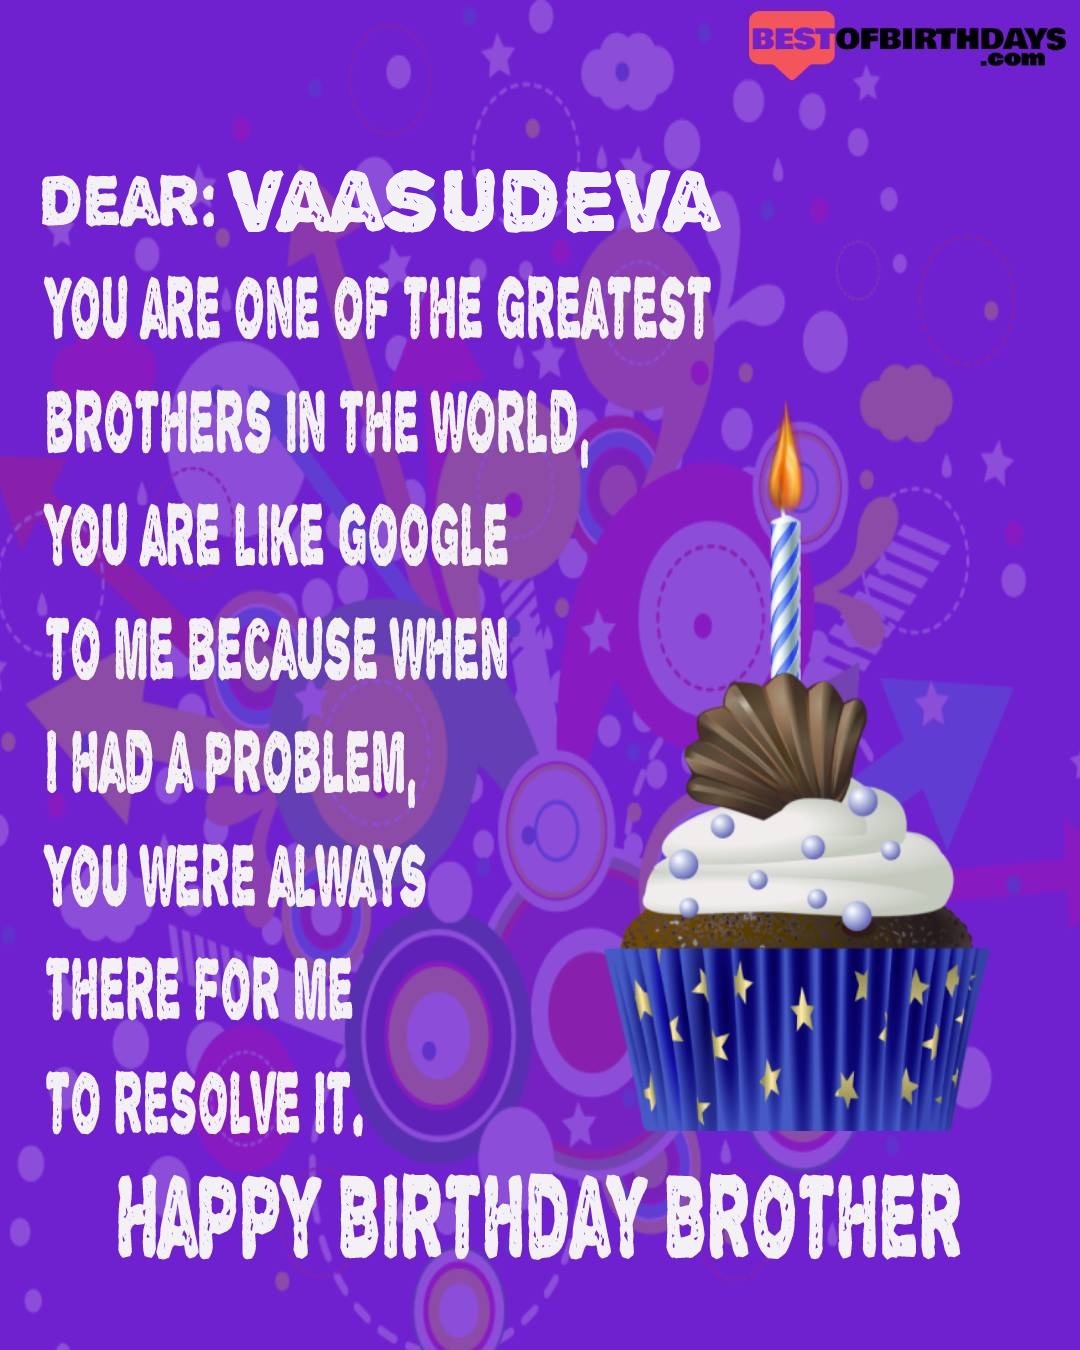 Happy birthday vaasudeva bhai brother bro